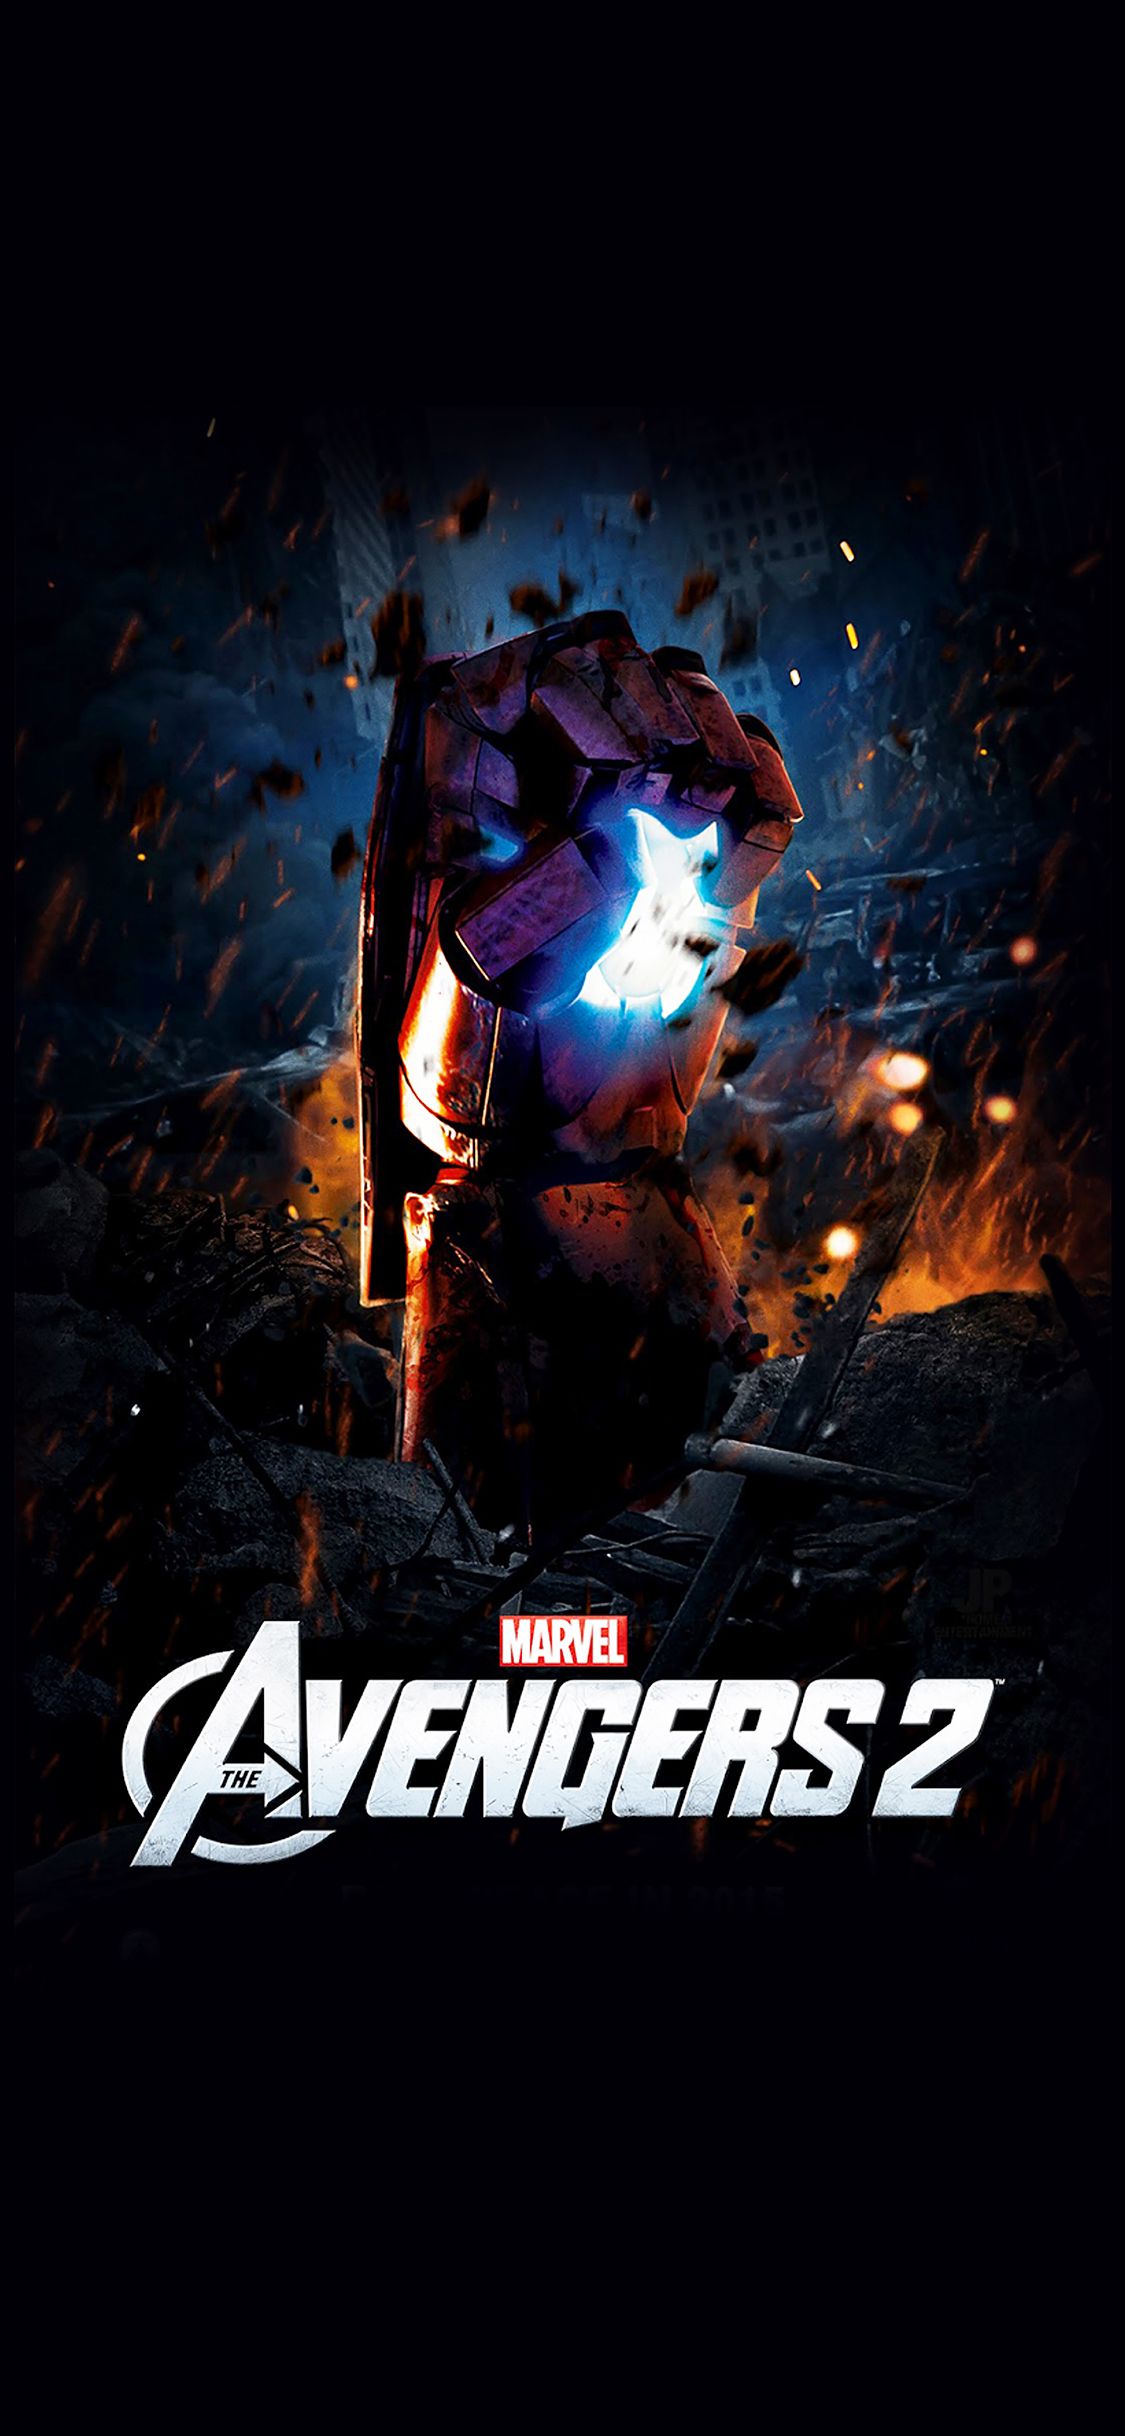 Avengers 2 Poster Hollywood Film Poster